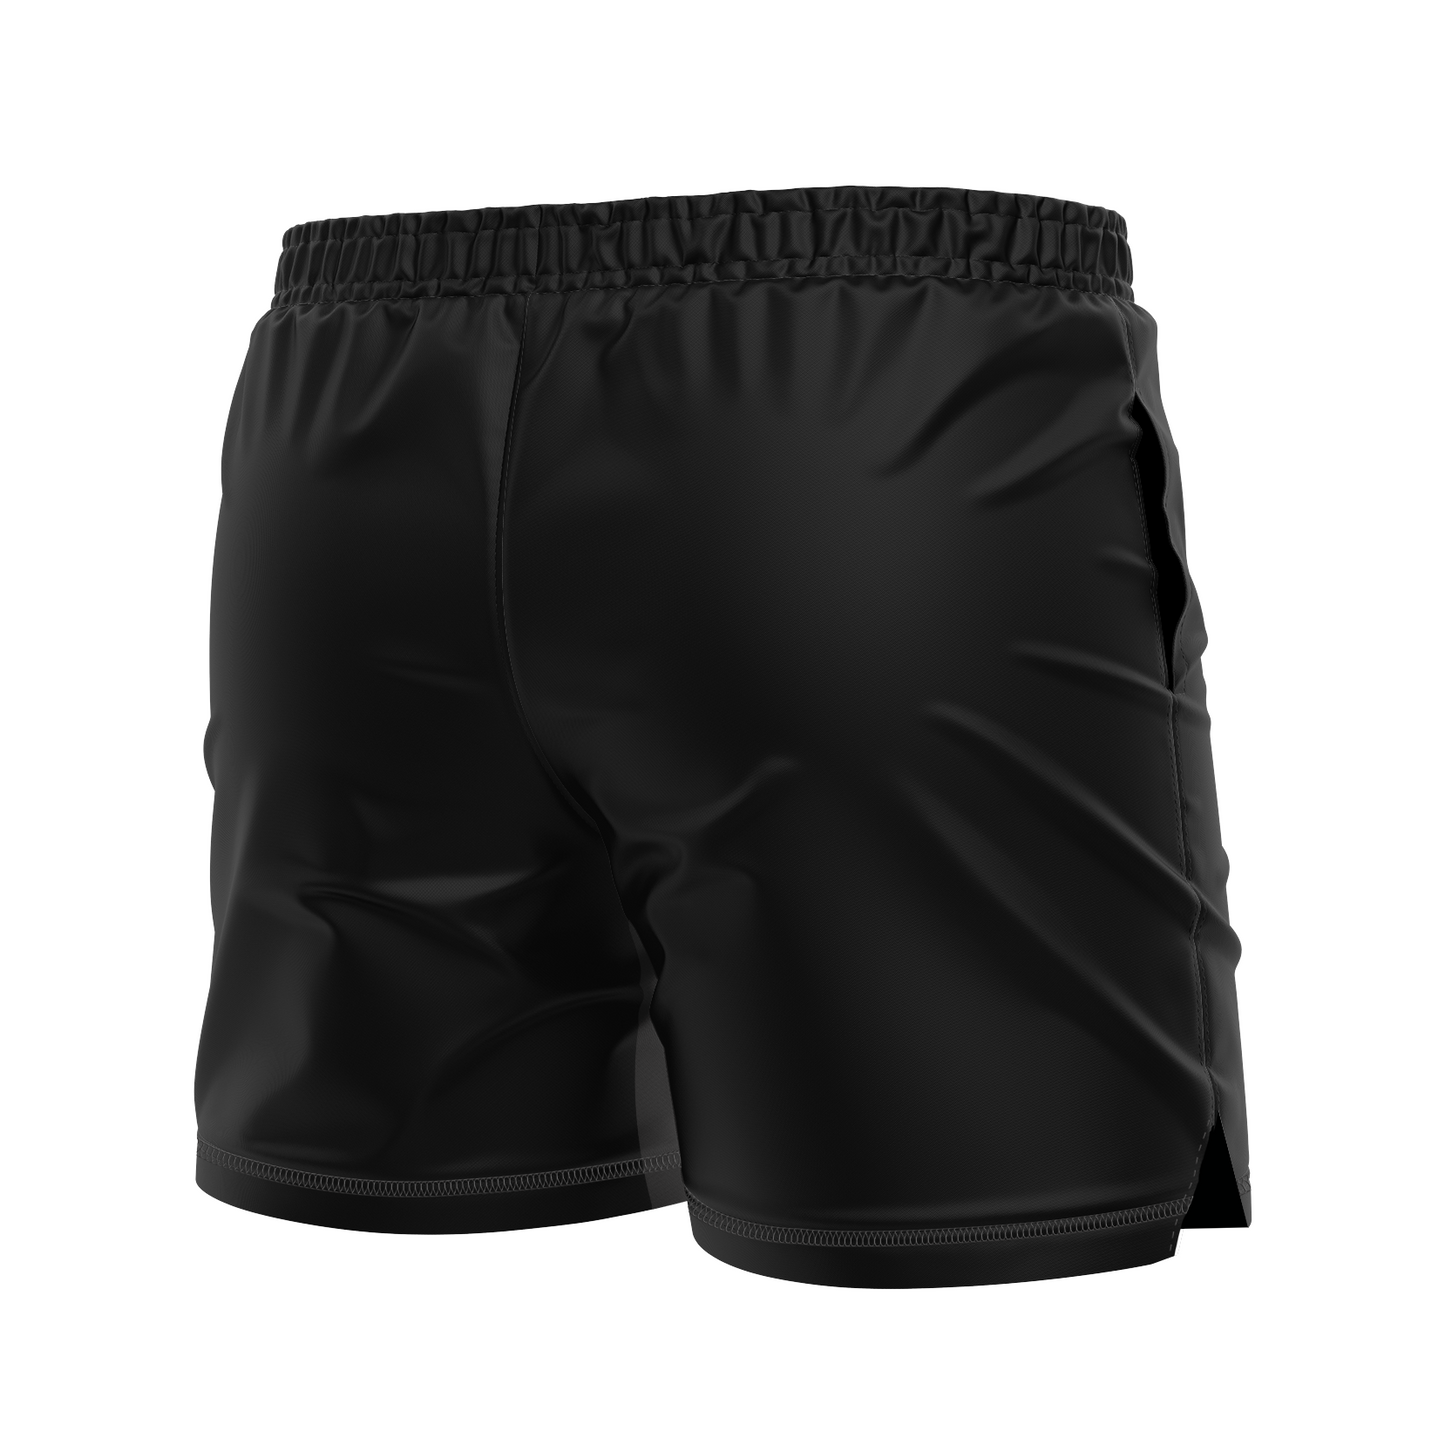 Death by Wristlock: Ouroboros men's FC shorts, black